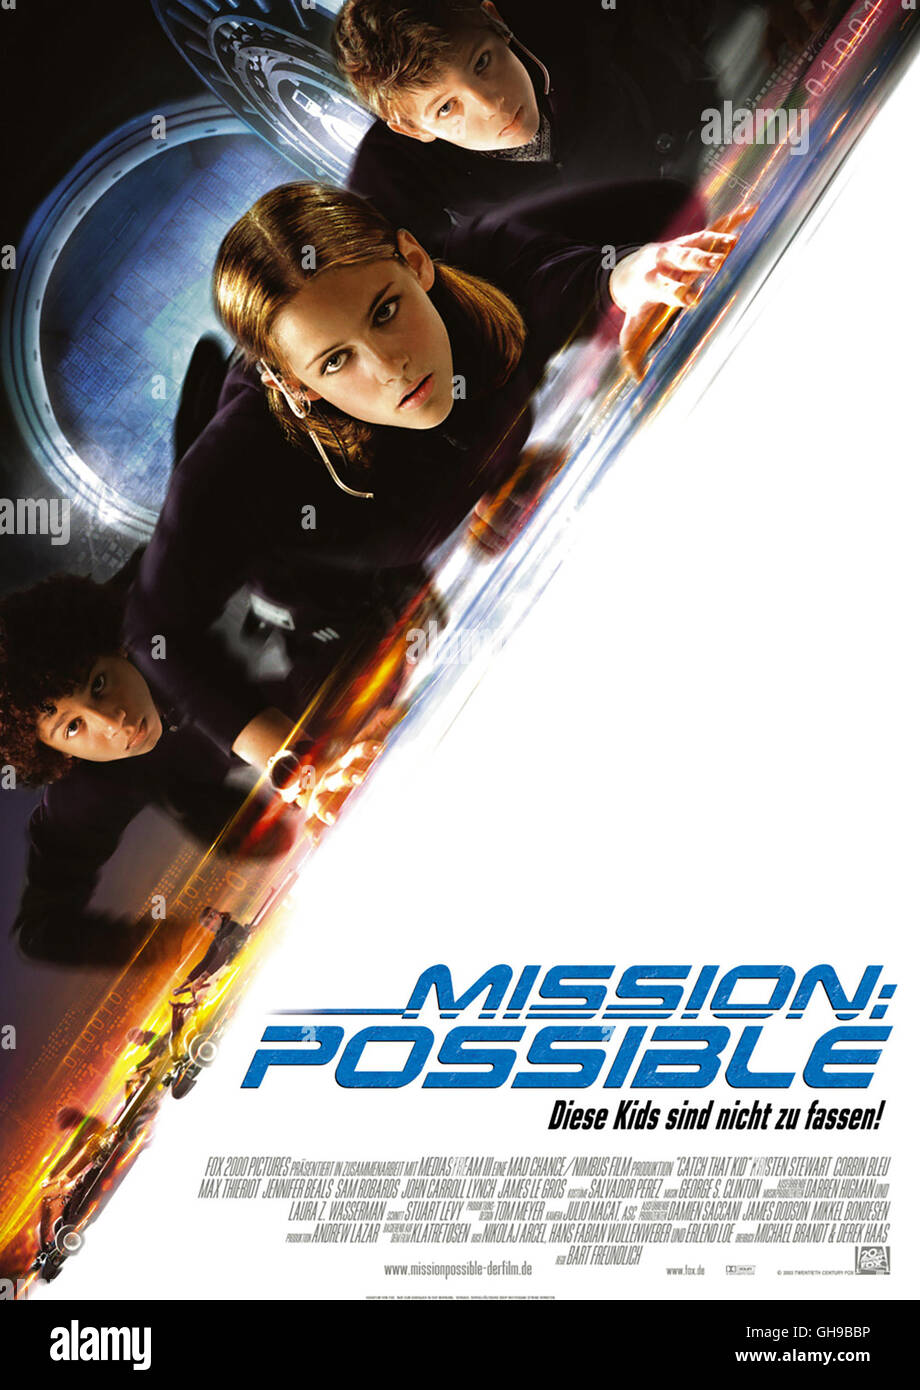 MISSION POSSIBLE Mission possible / USA 2004 / Bart Freundlich Filmplakat Regie : Bart Freundlich aka. Mission possible Banque D'Images